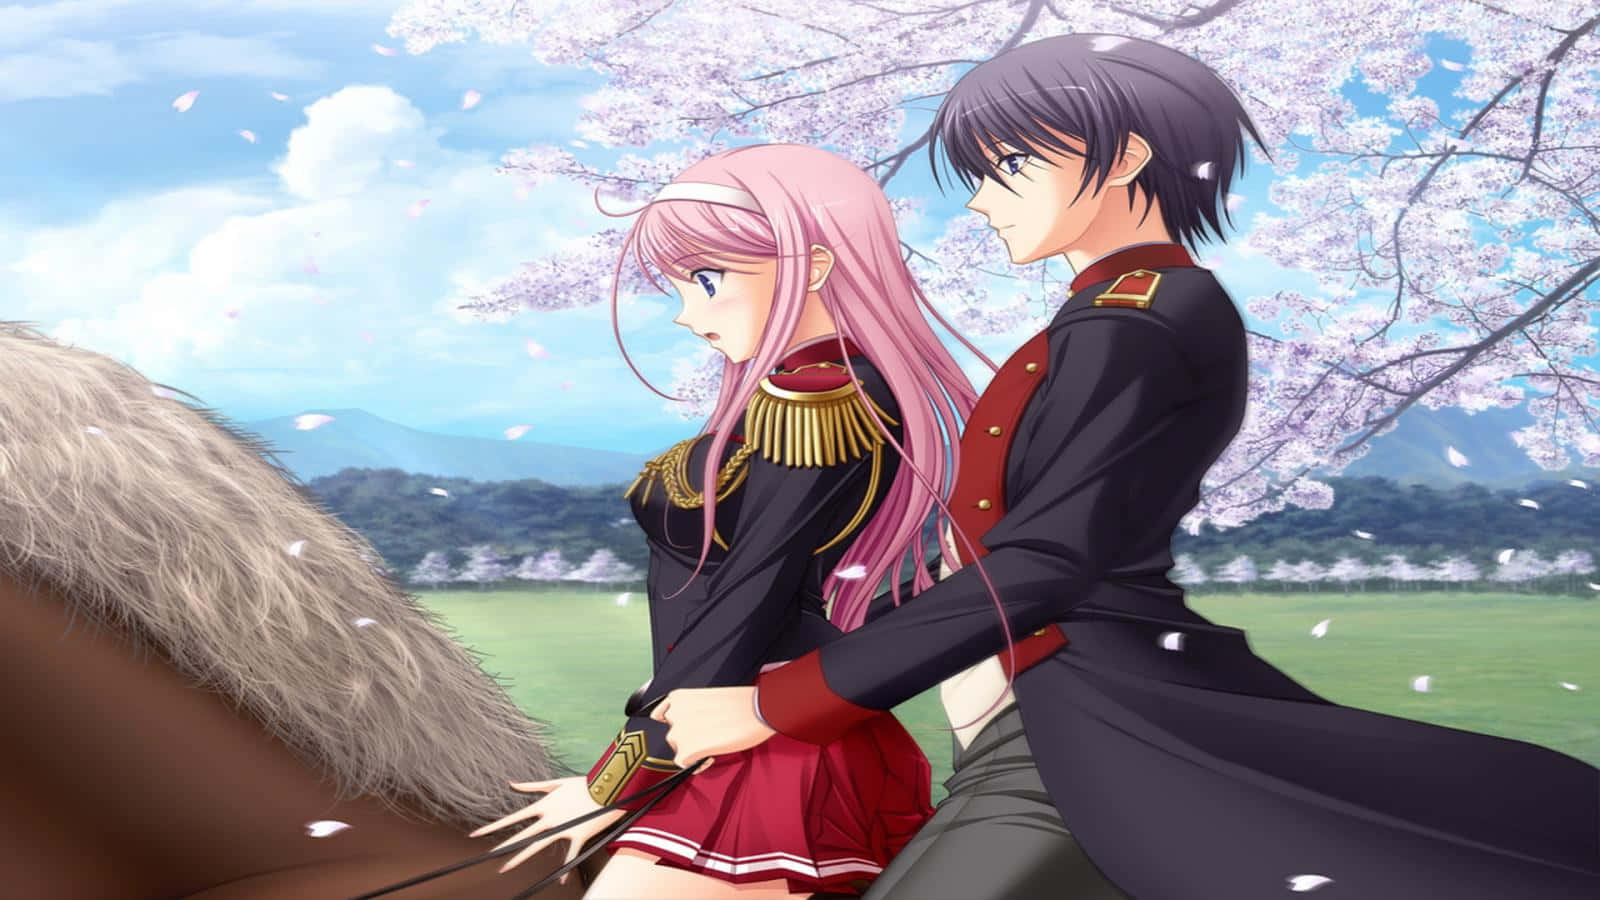 Kira And Lacus Riding Horse Romance Anime Wallpaper